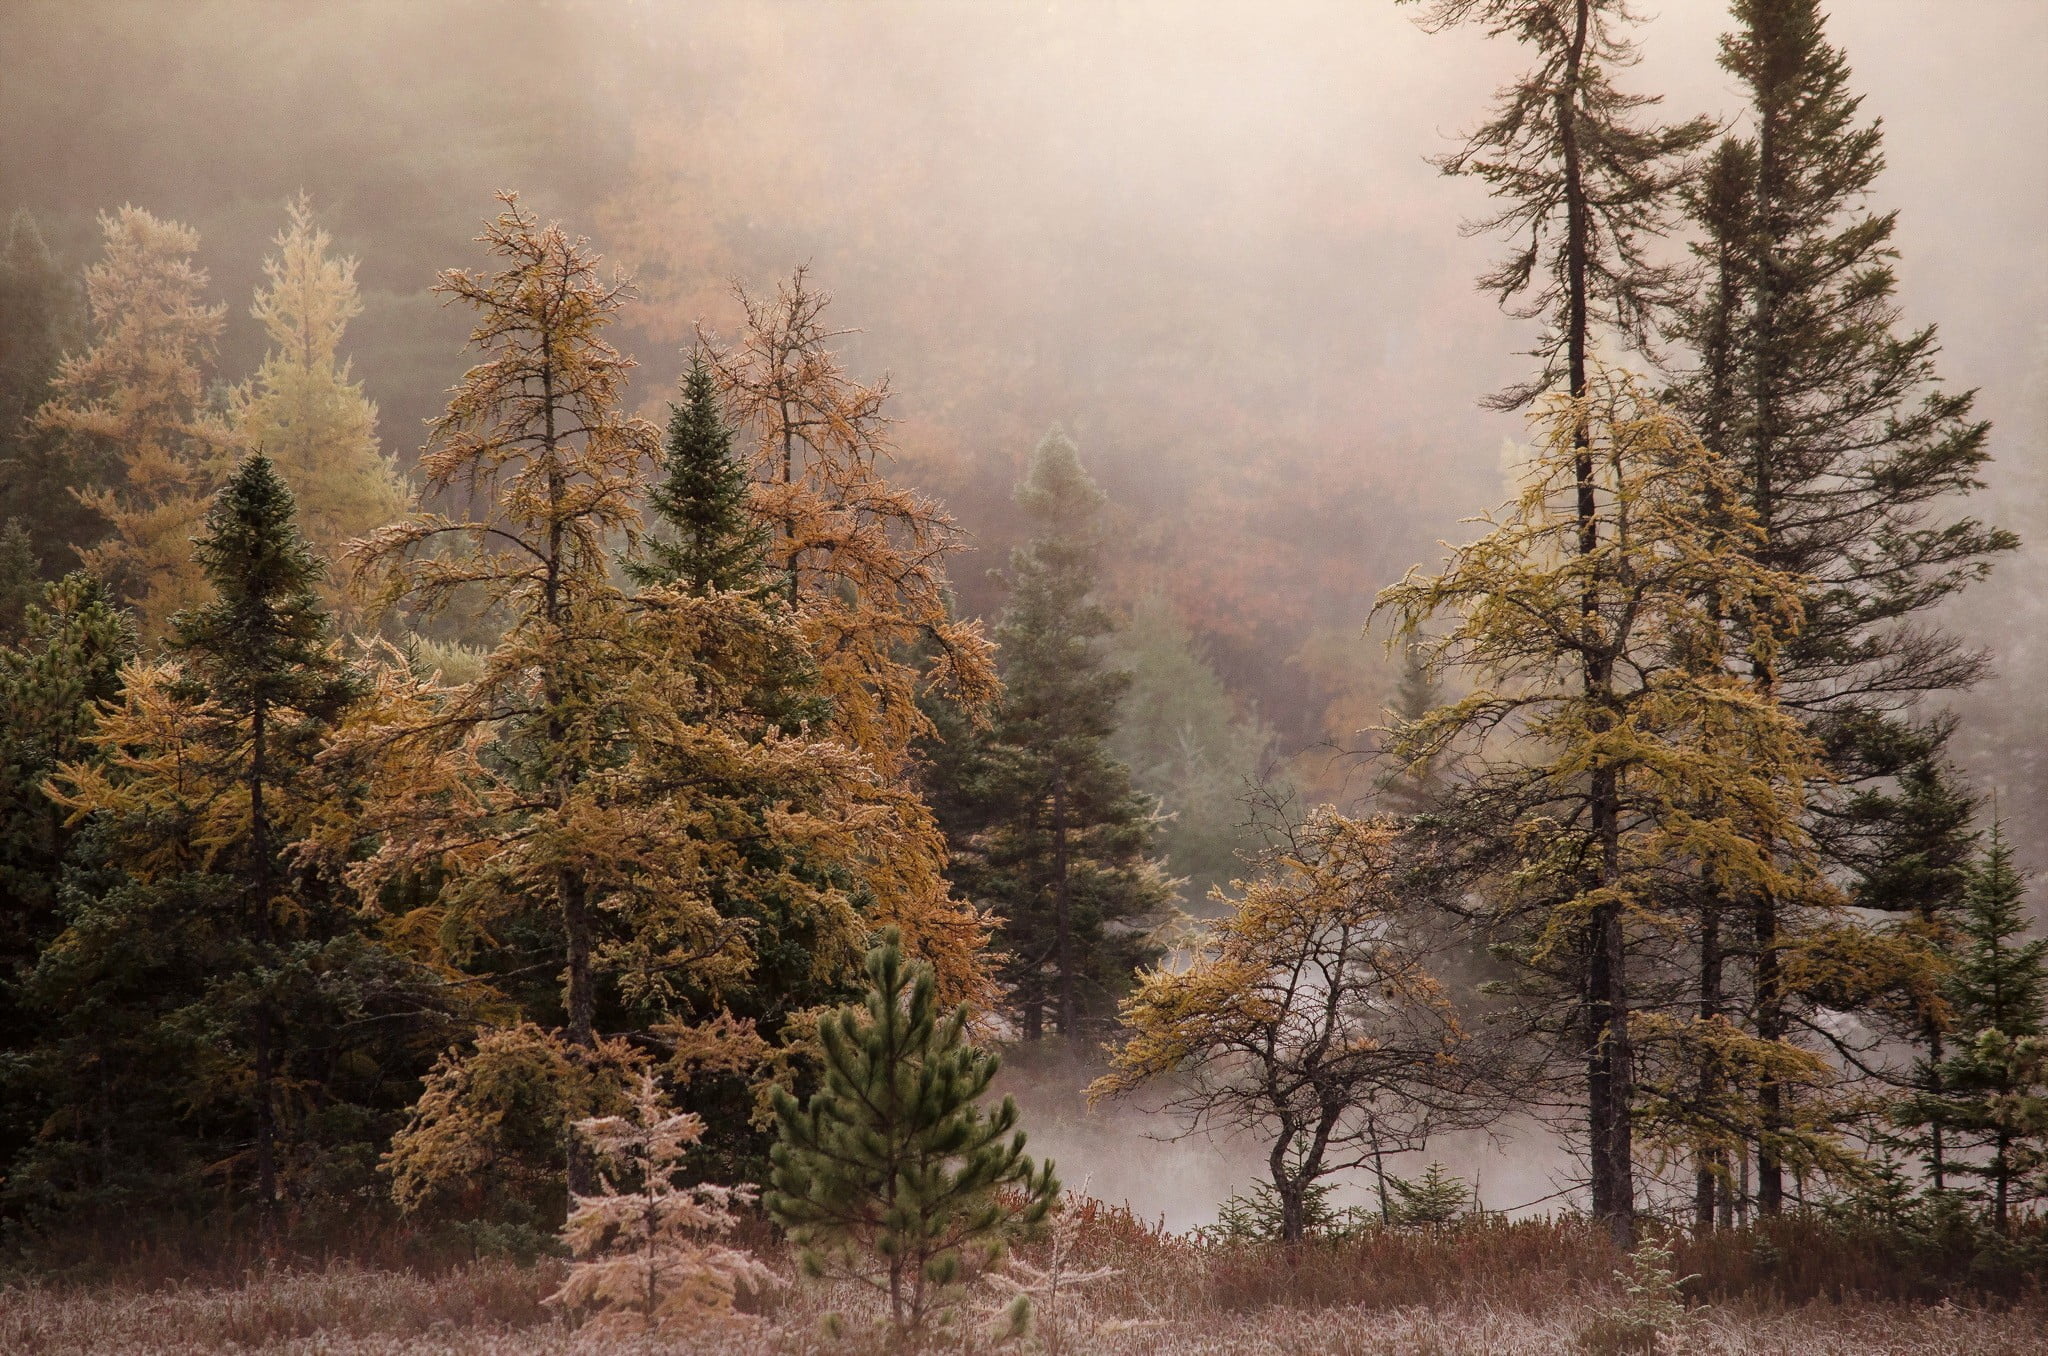 brown pine trees, landscape, trees, forest, mist